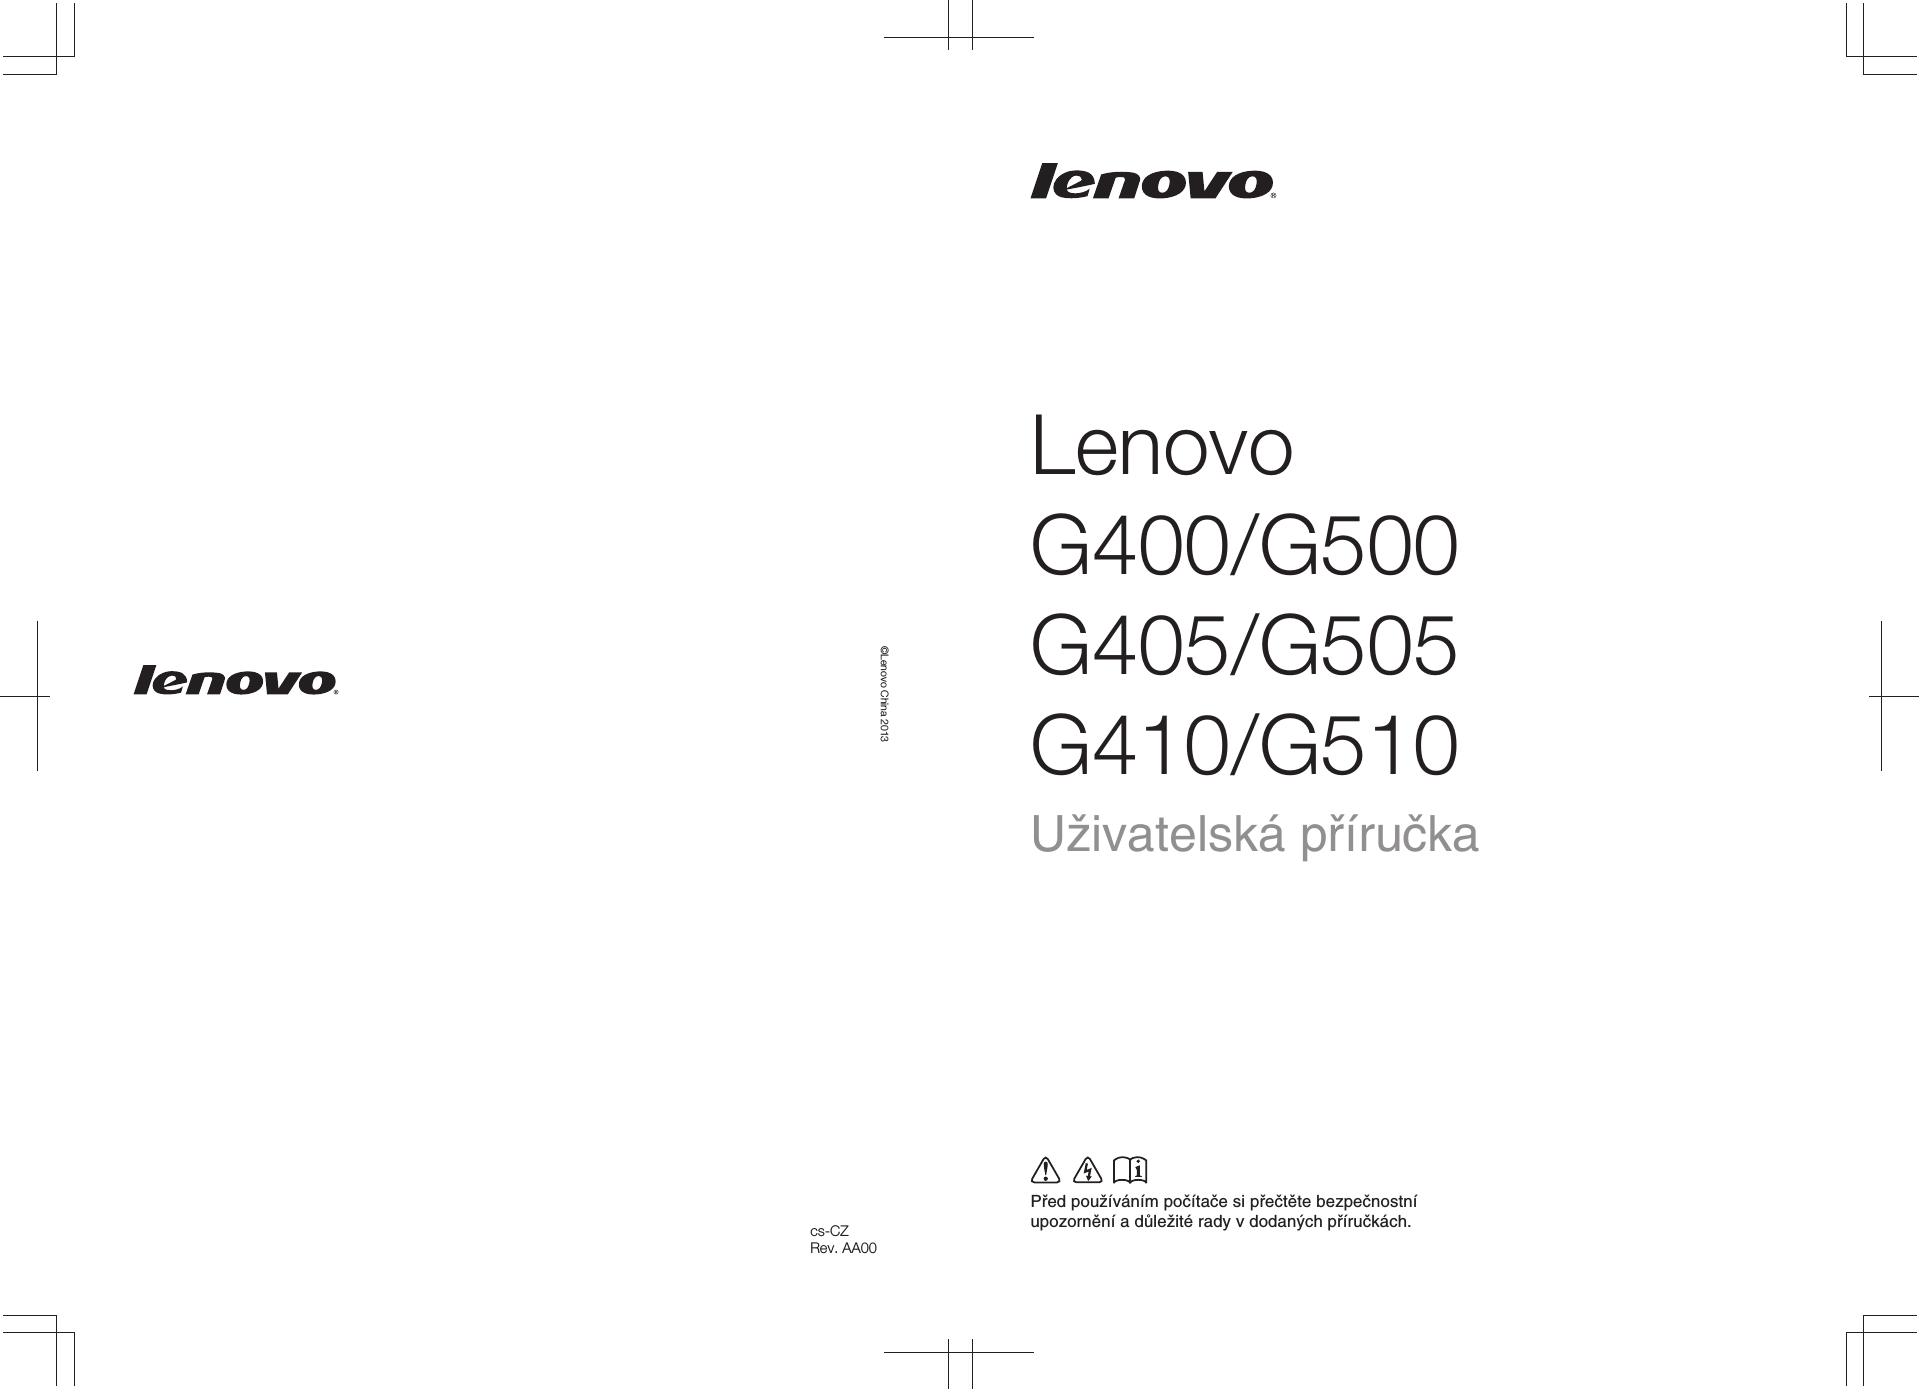 lenovo g510 onekey recovery windows 8.1